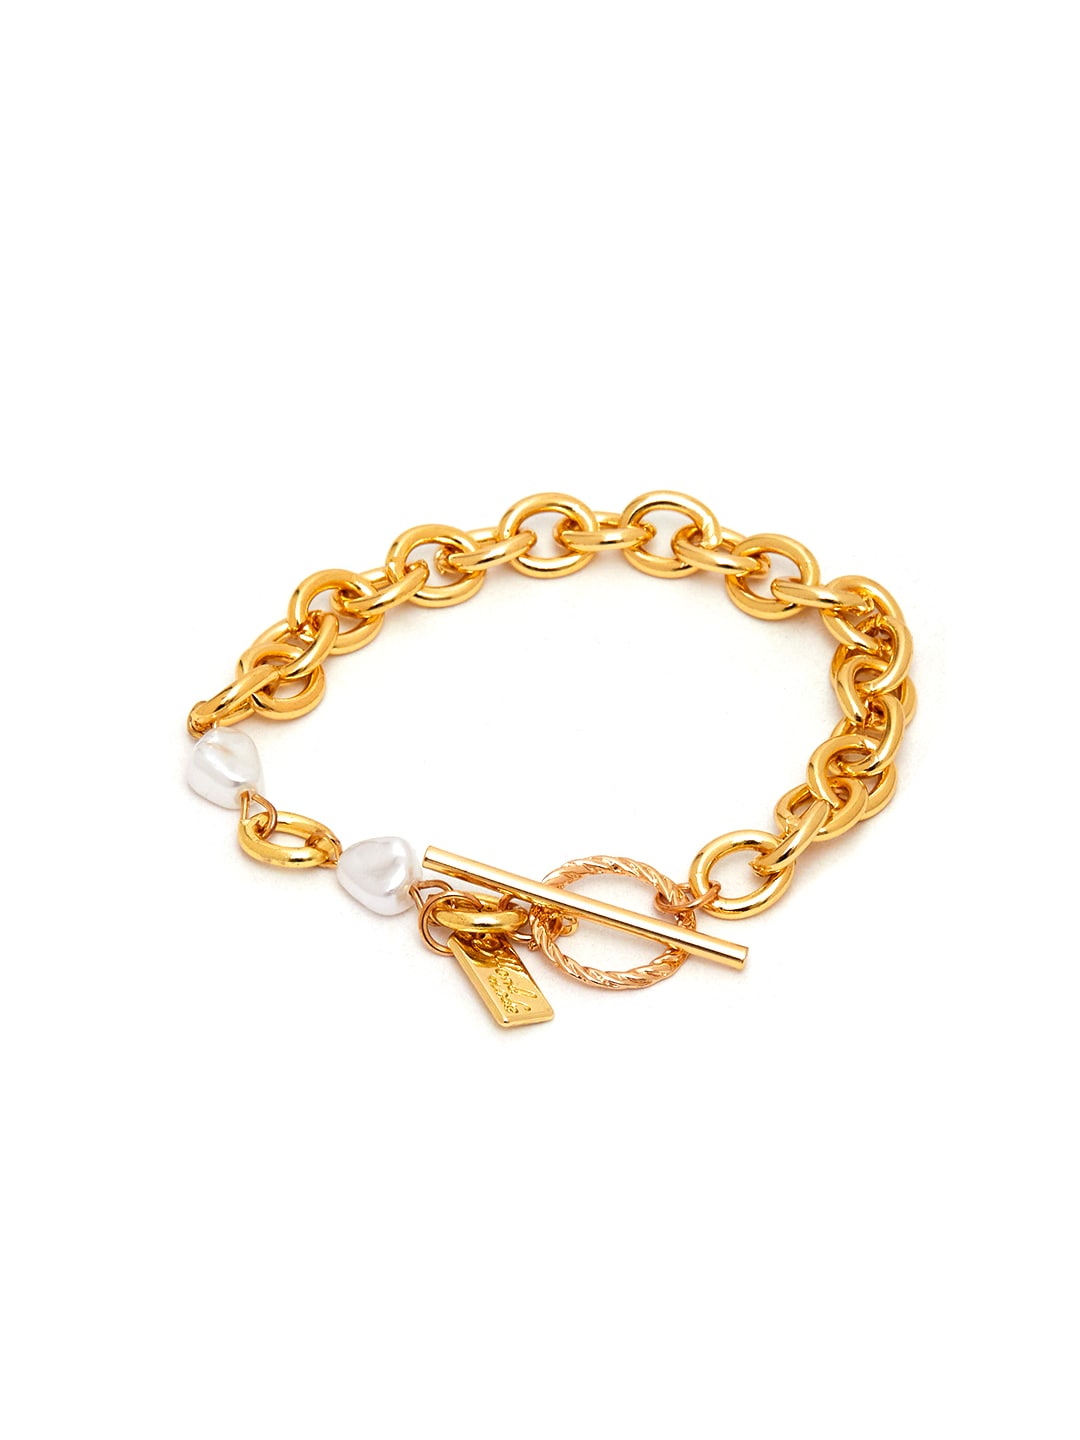 URBANIC Gold-Toned & Off White Beaded Link Bracelet Price in India